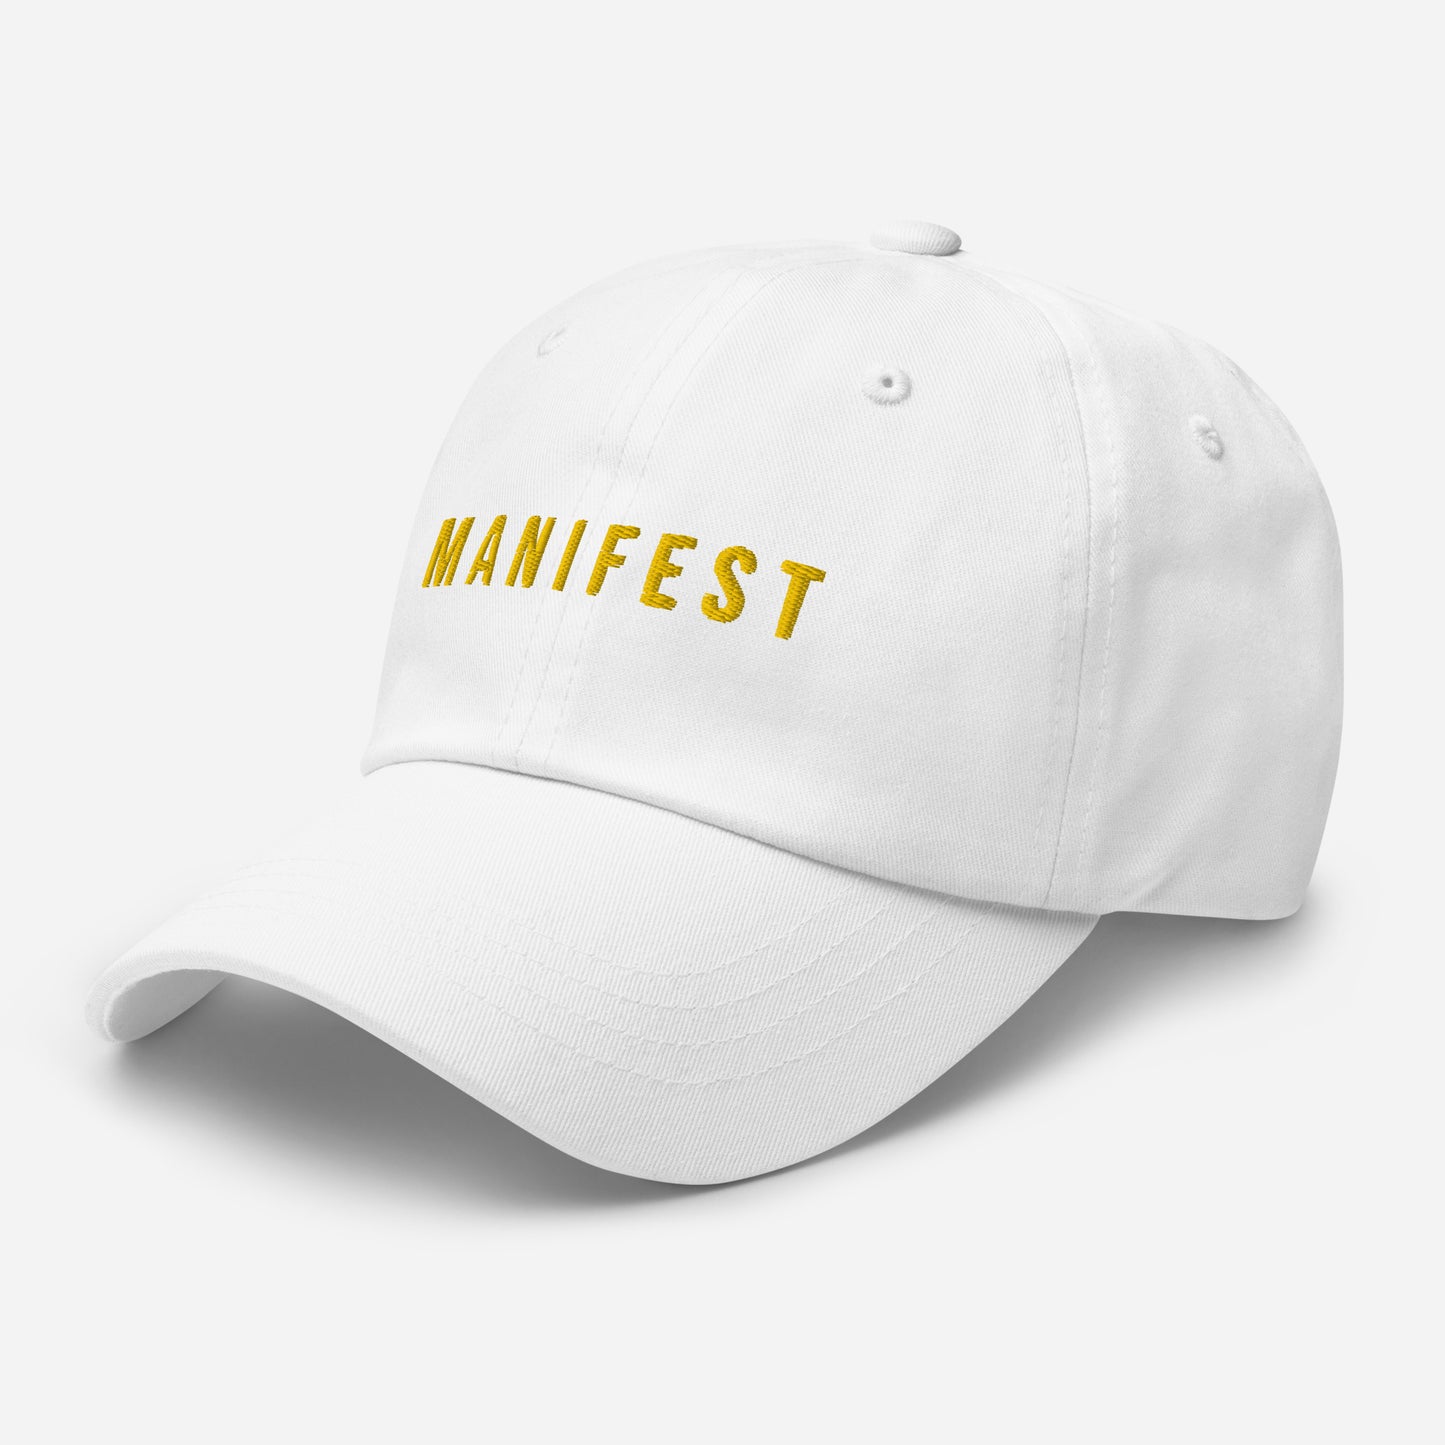 Manifest Hat